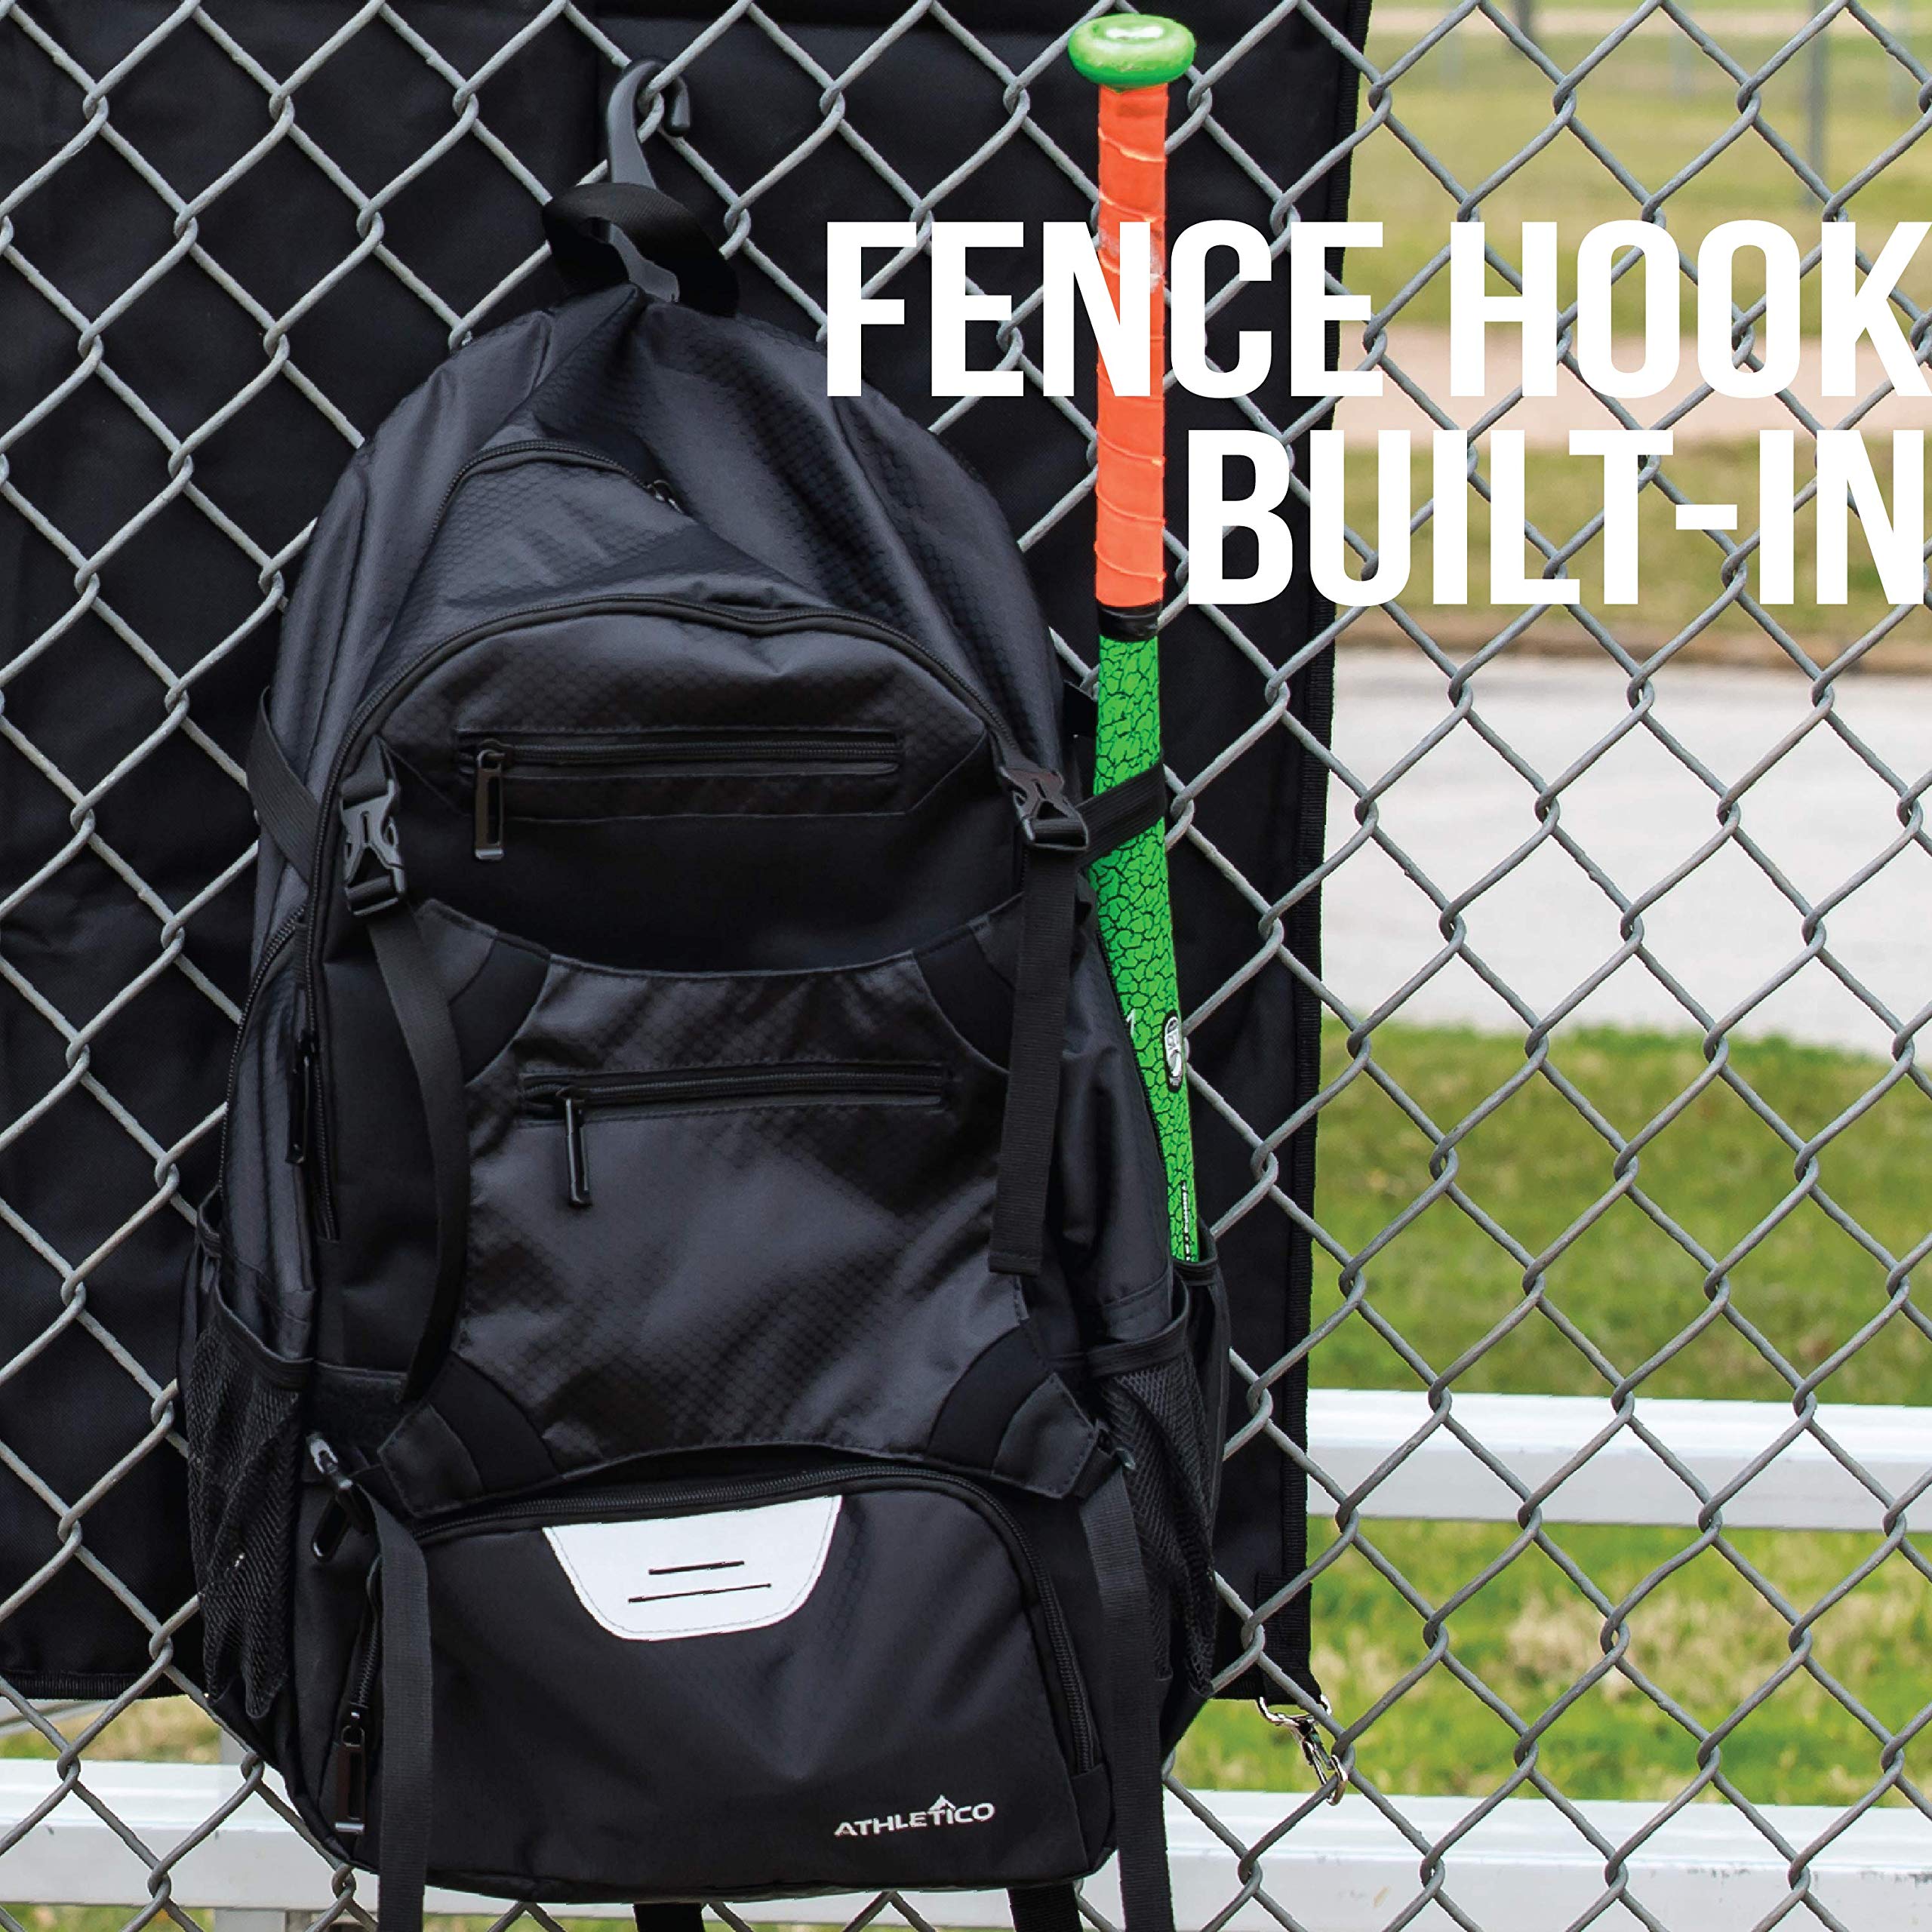 Athletico Advantage Baseball Bag - Baseball Backpack With External Helmet Holder for Baseball, T-Ball & Softball Equipment & Gear for Youth and Adults | Holds Bat, Helmet, Glove, Shoes  - Like New